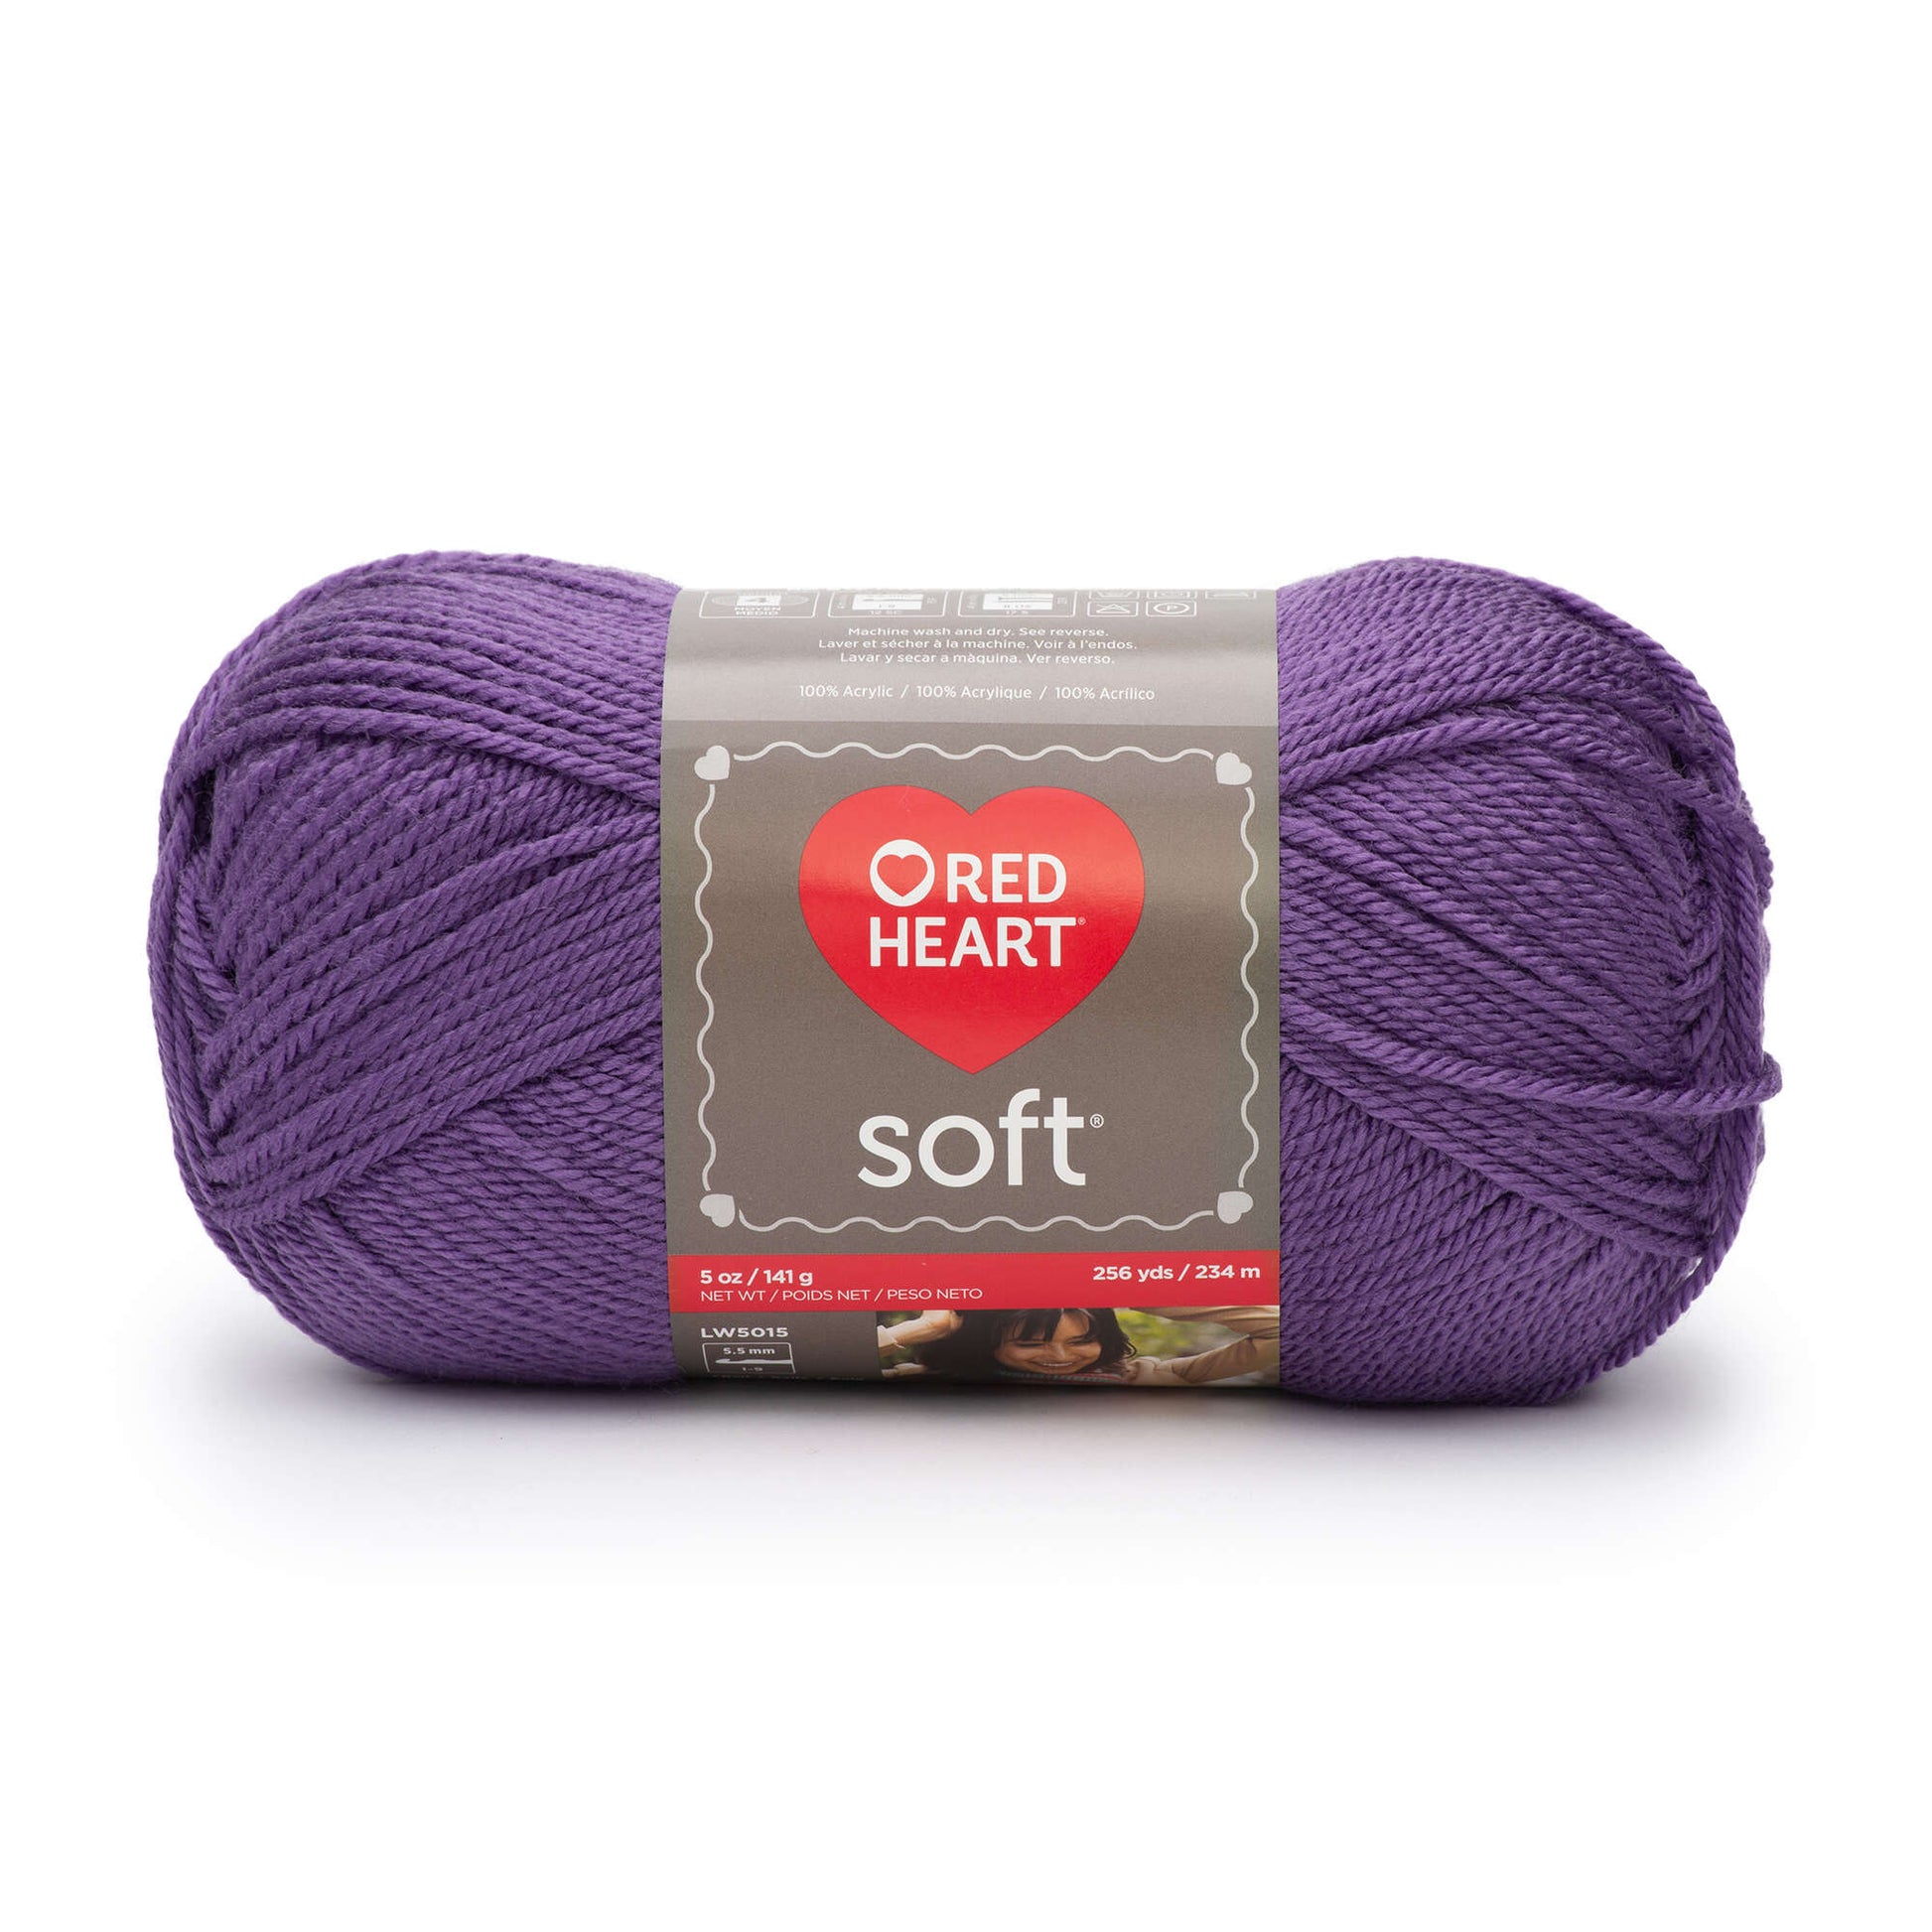 Bernat Softee Baby Soft Lilac Yarn - 3 Pack Of 141g/5oz - Acrylic